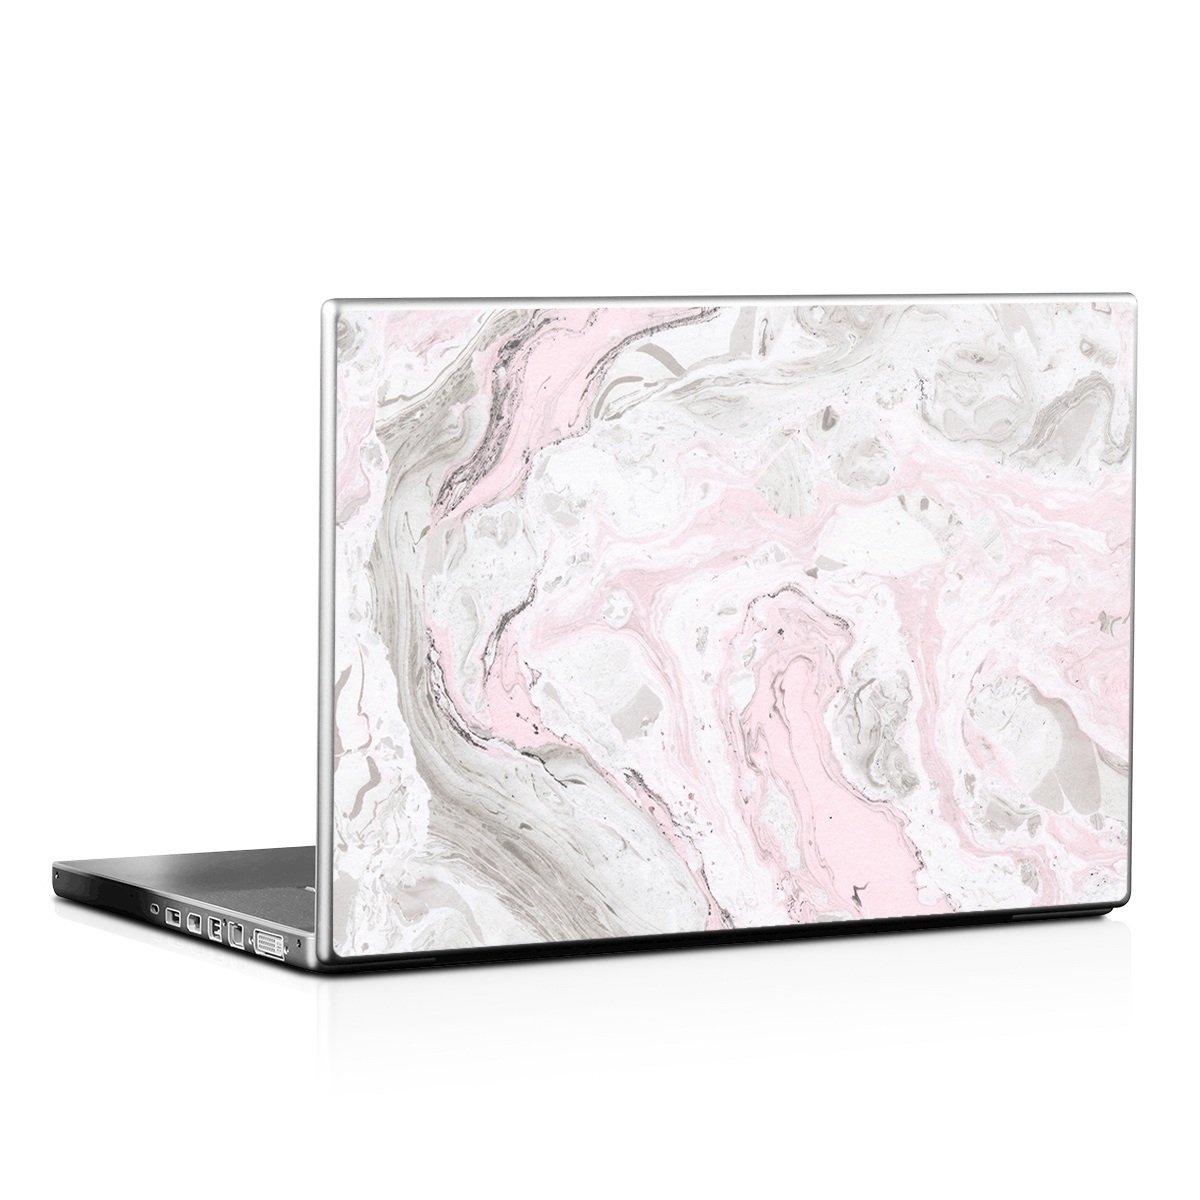 Laptop Skin - Rosa Marble (Image 1)